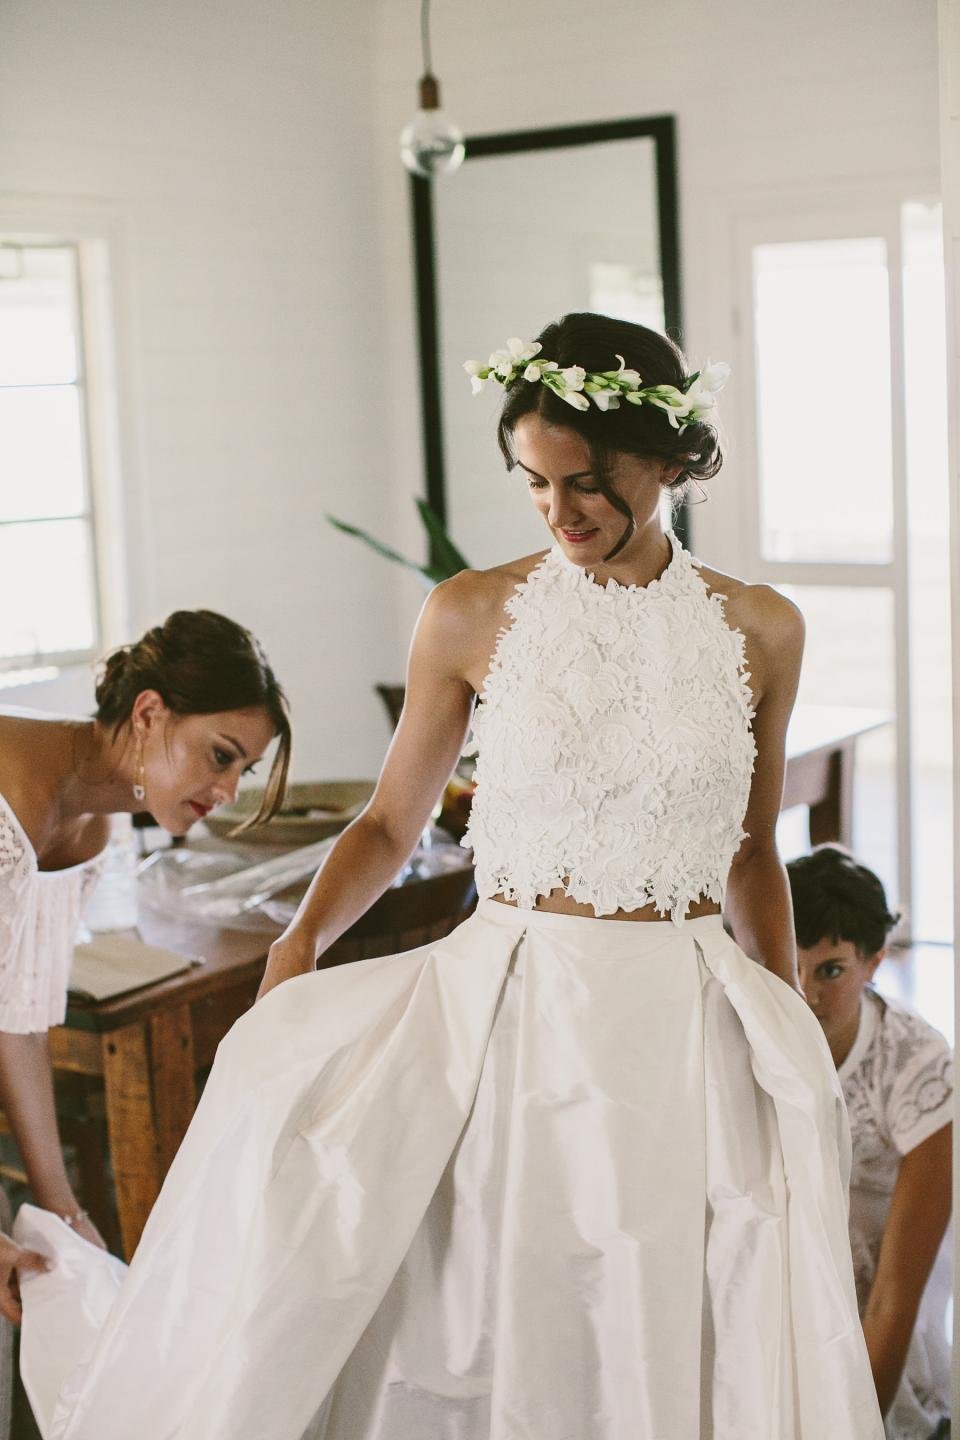 Wedding Dress Ideas: Alternative, Trendy Looks | Apartment Therapy